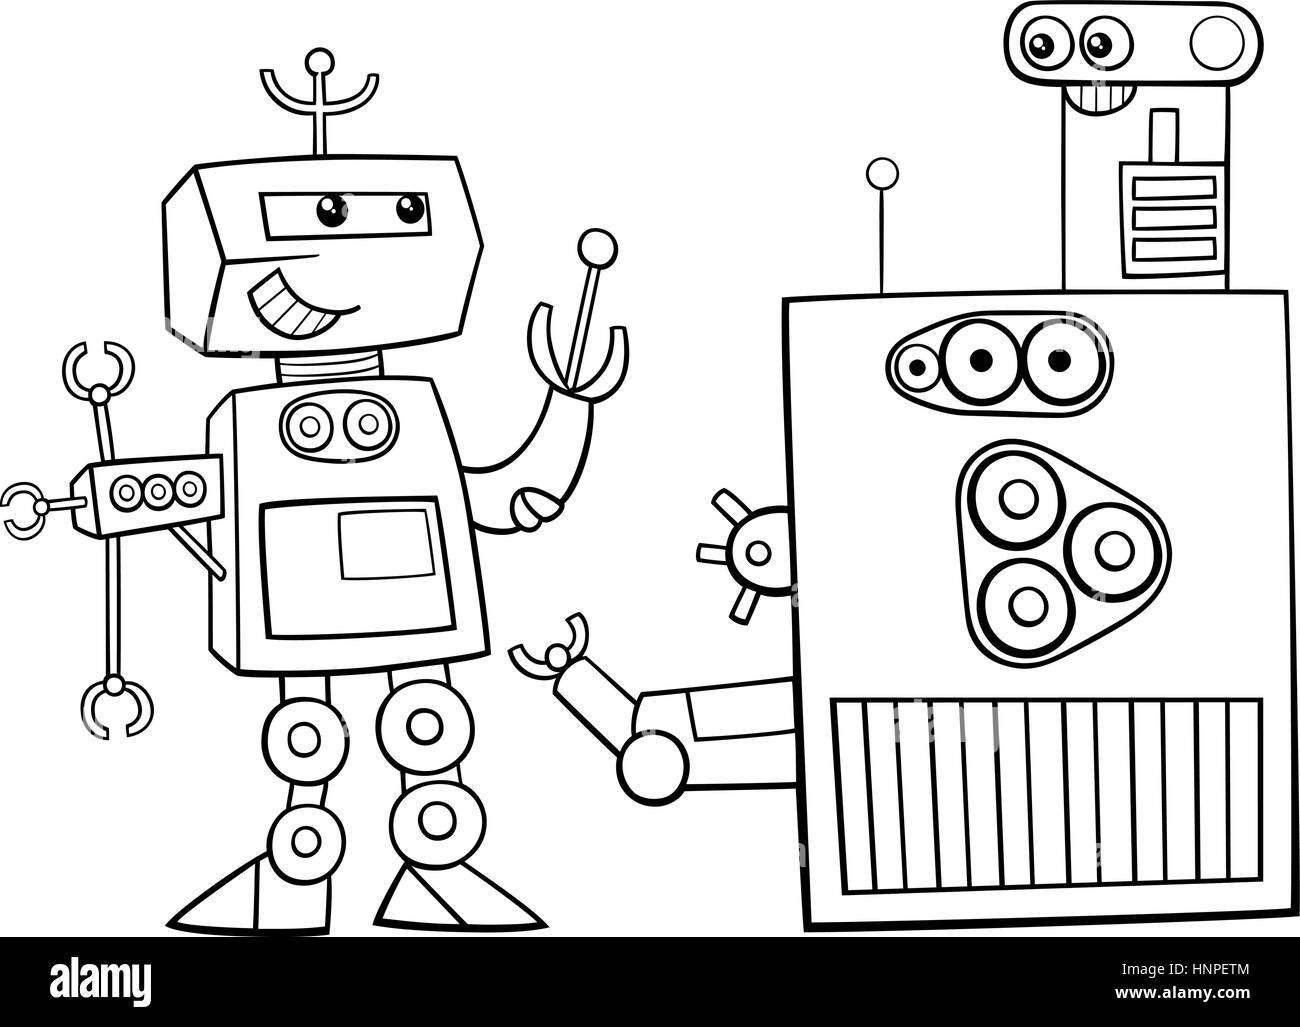 робот штучний інтелект скласти пазл онлайн з фото